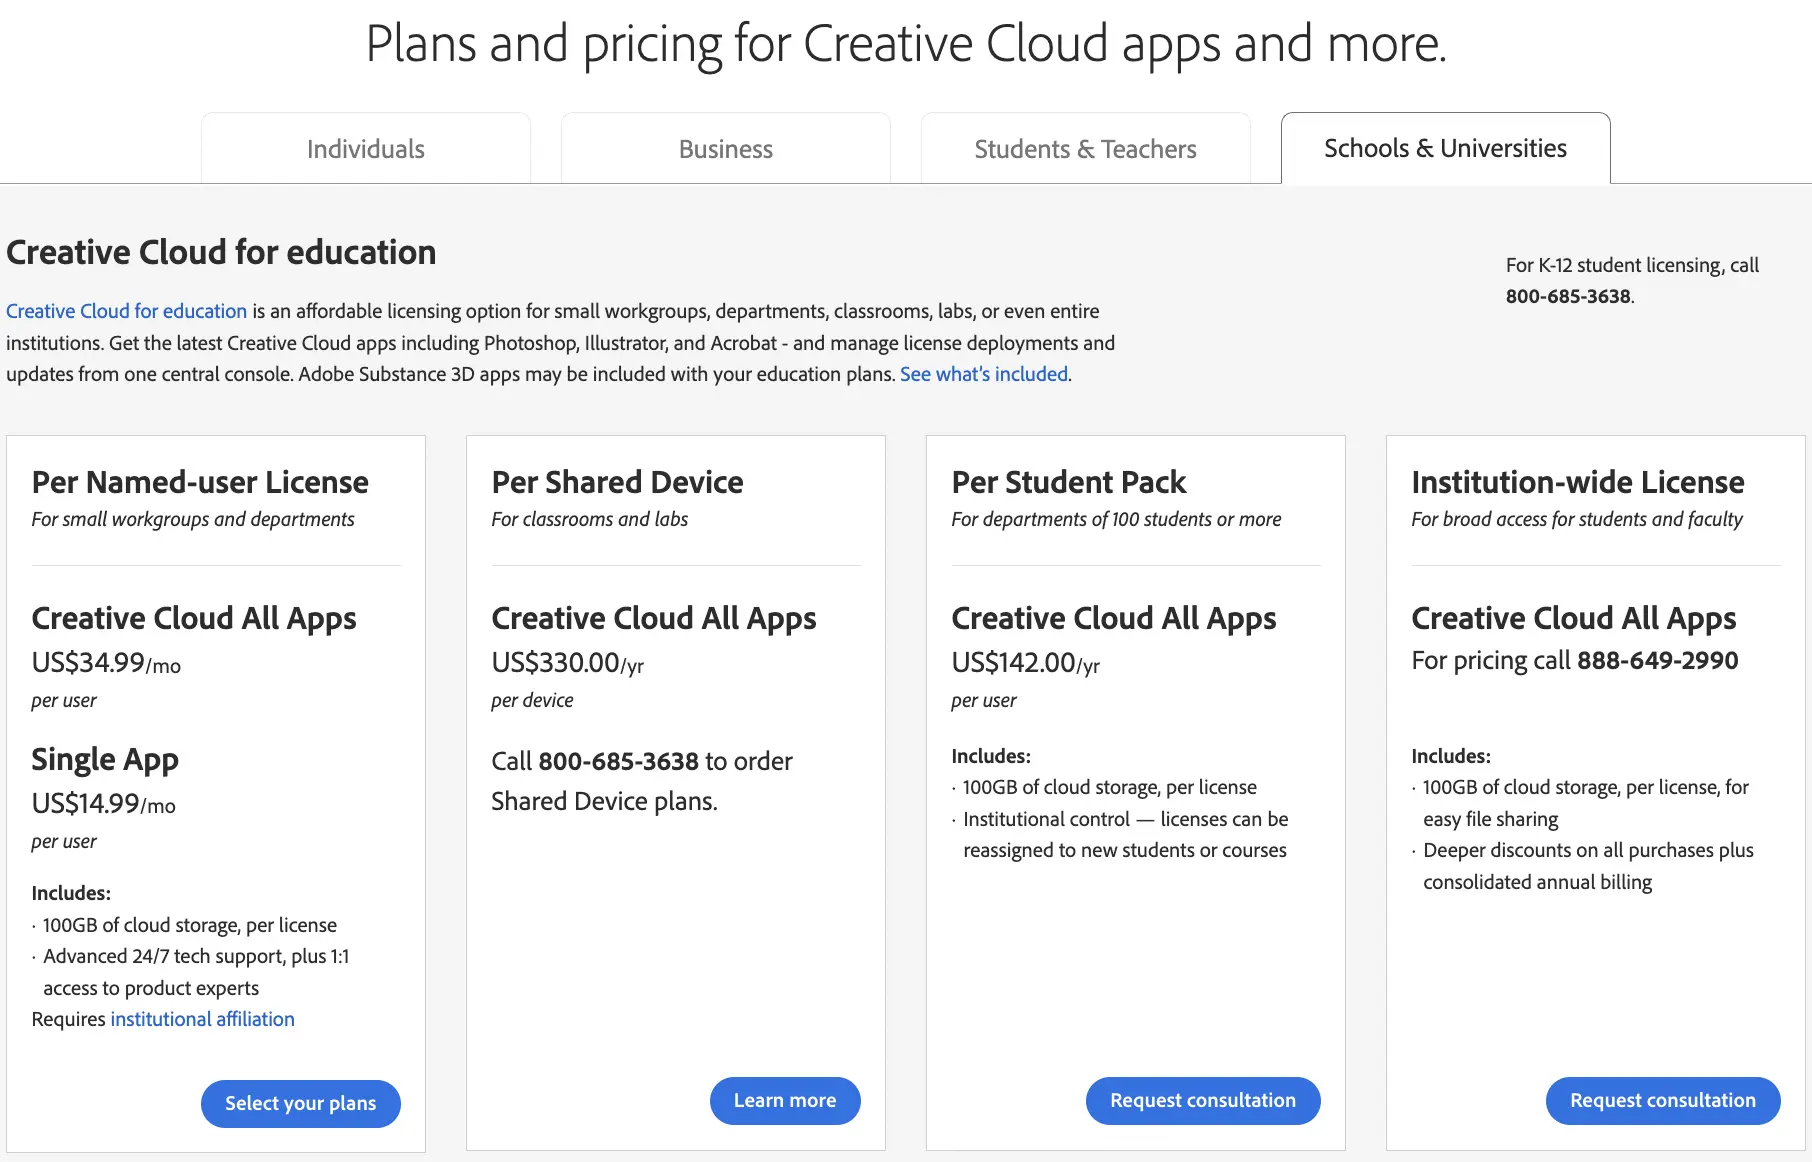 Is Creative Cloud Free?